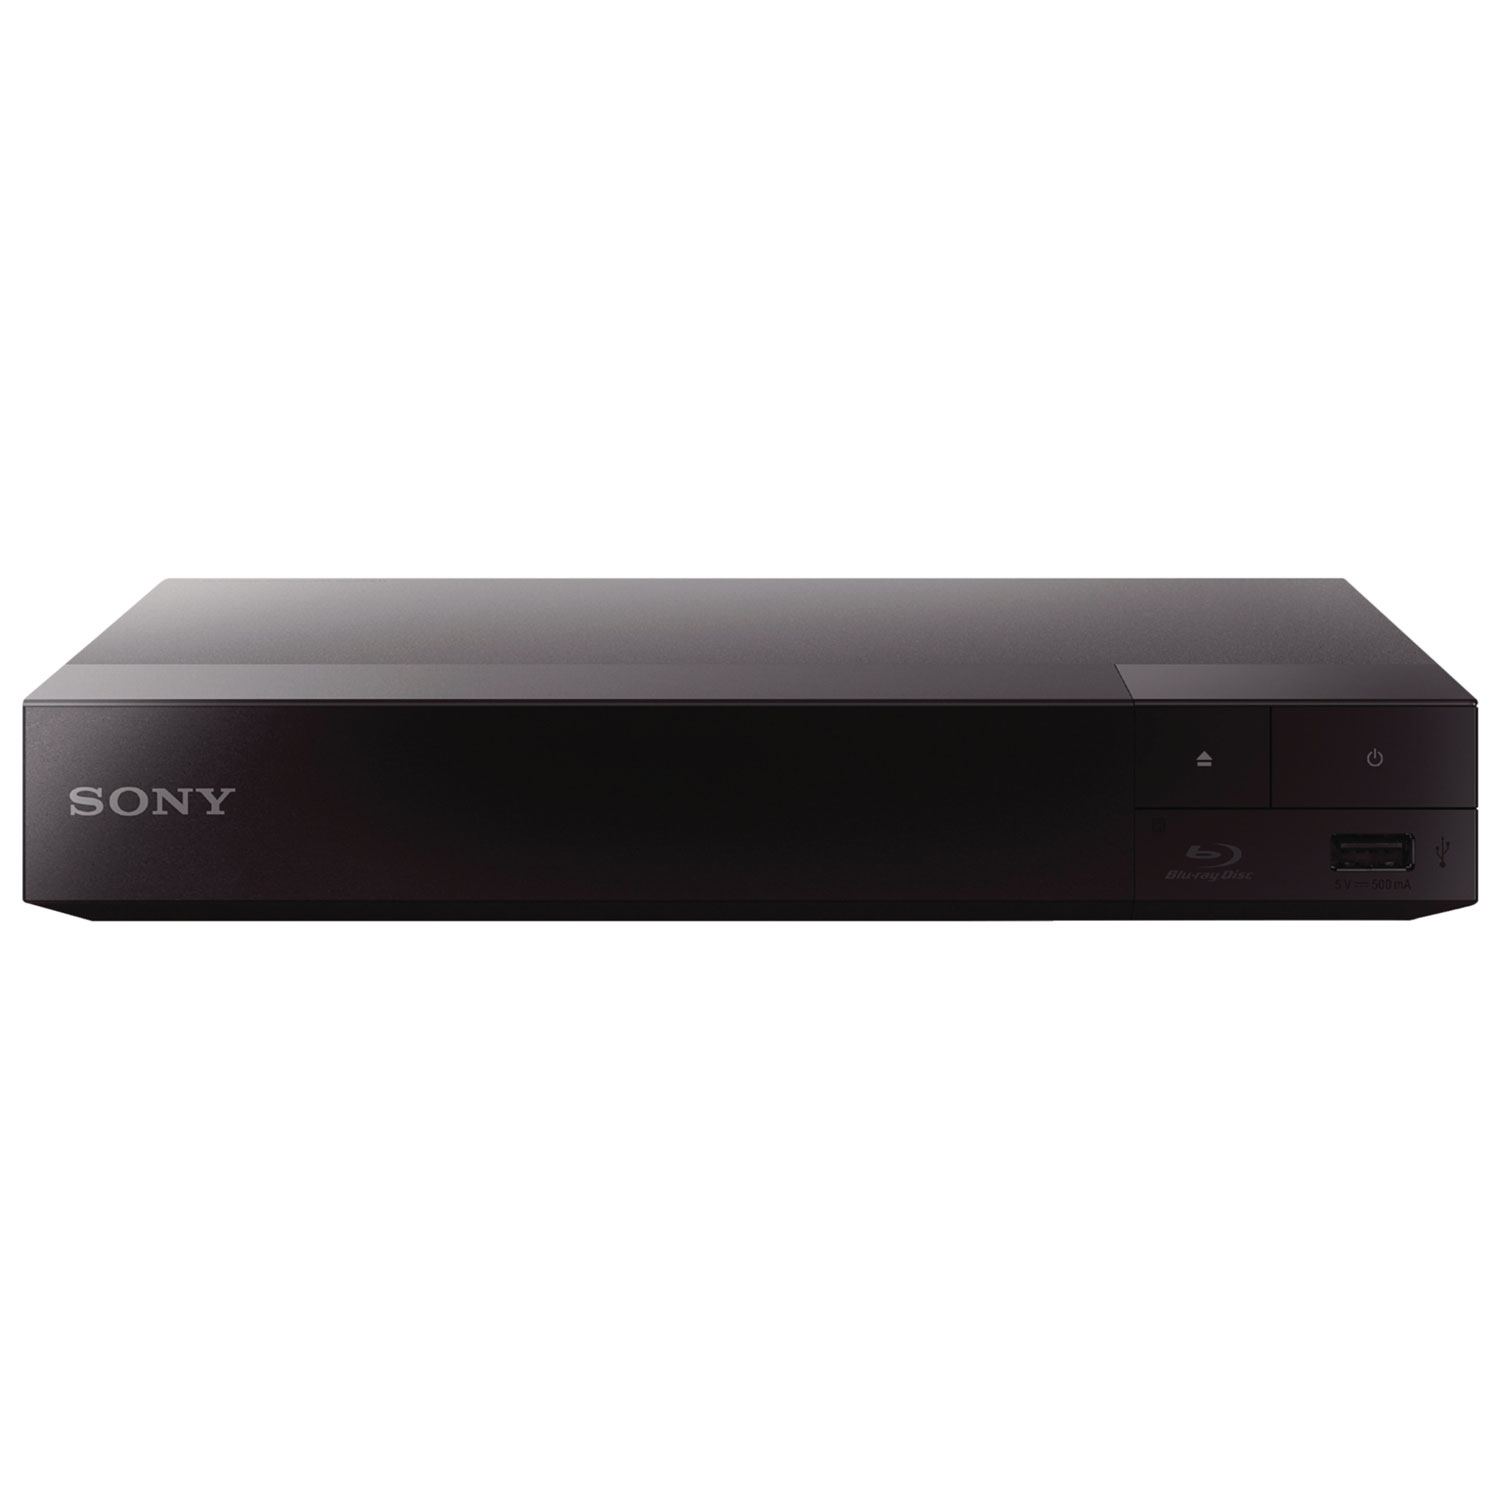 Sony Blu-ray Player (BDPS1700)